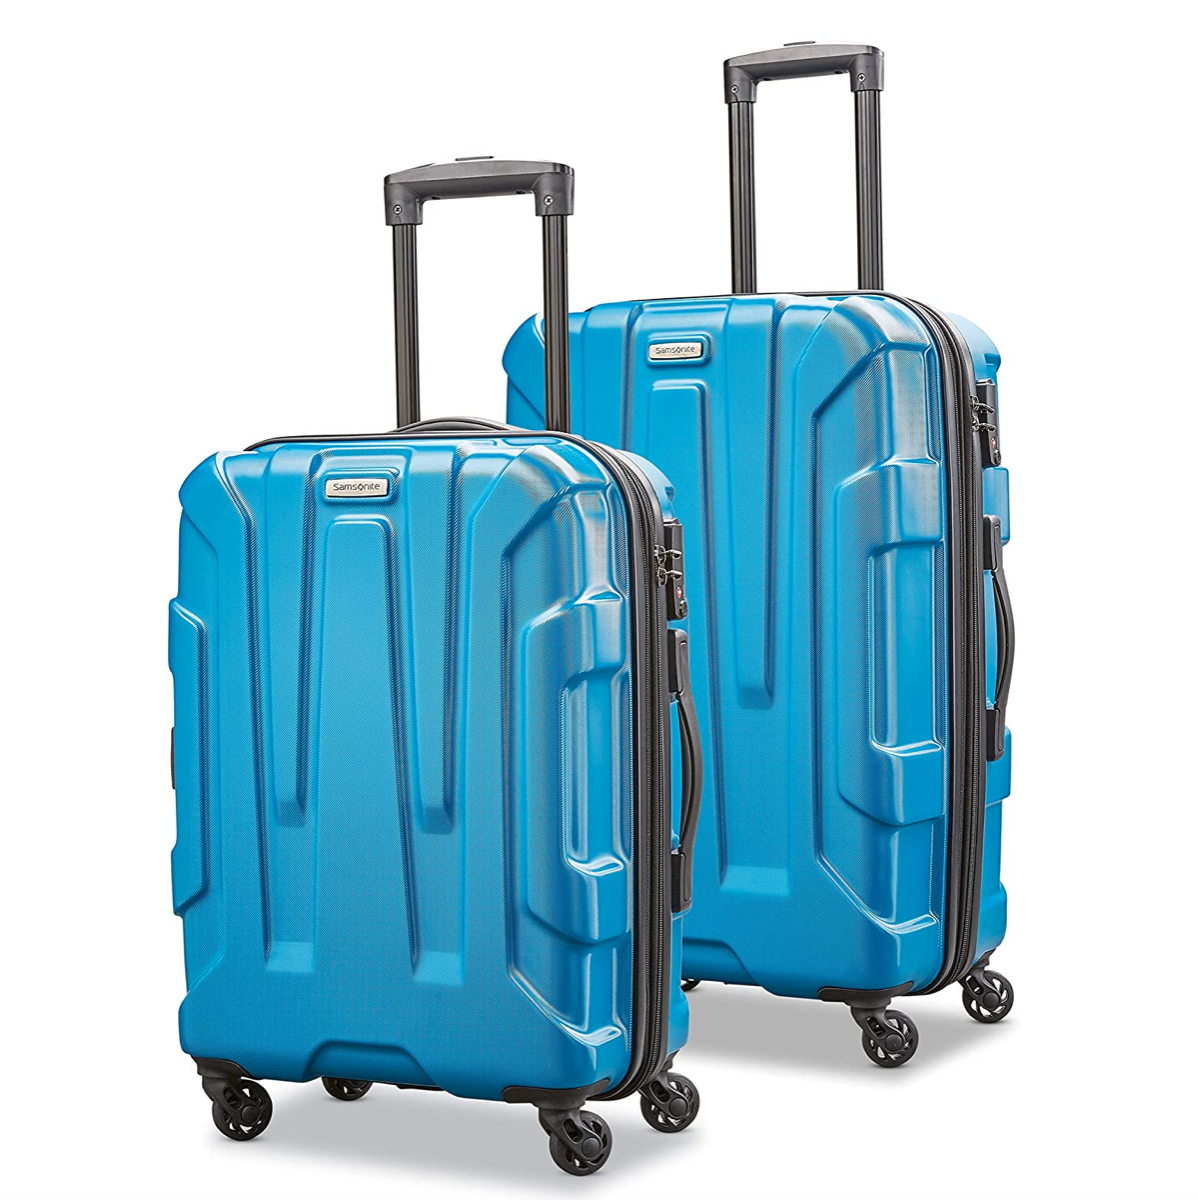 Prime members: 2-piece Samsonite hardside luggage sets from $100 - Clark Deals